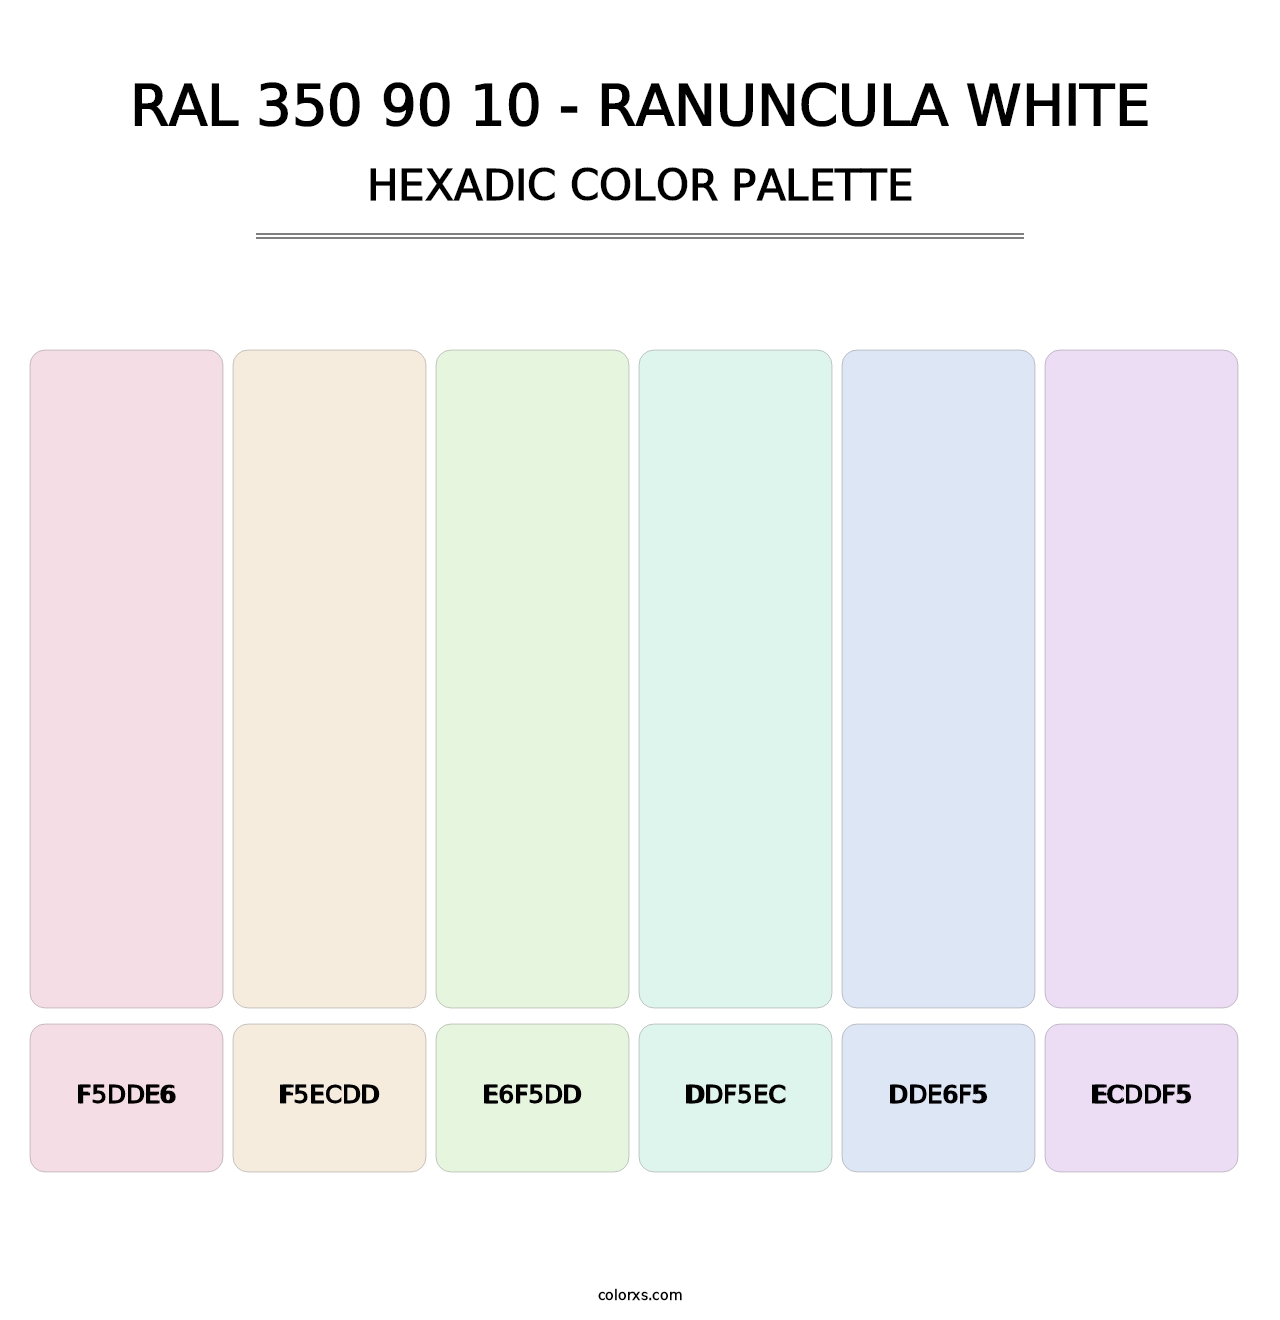 RAL 350 90 10 - Ranuncula White - Hexadic Color Palette